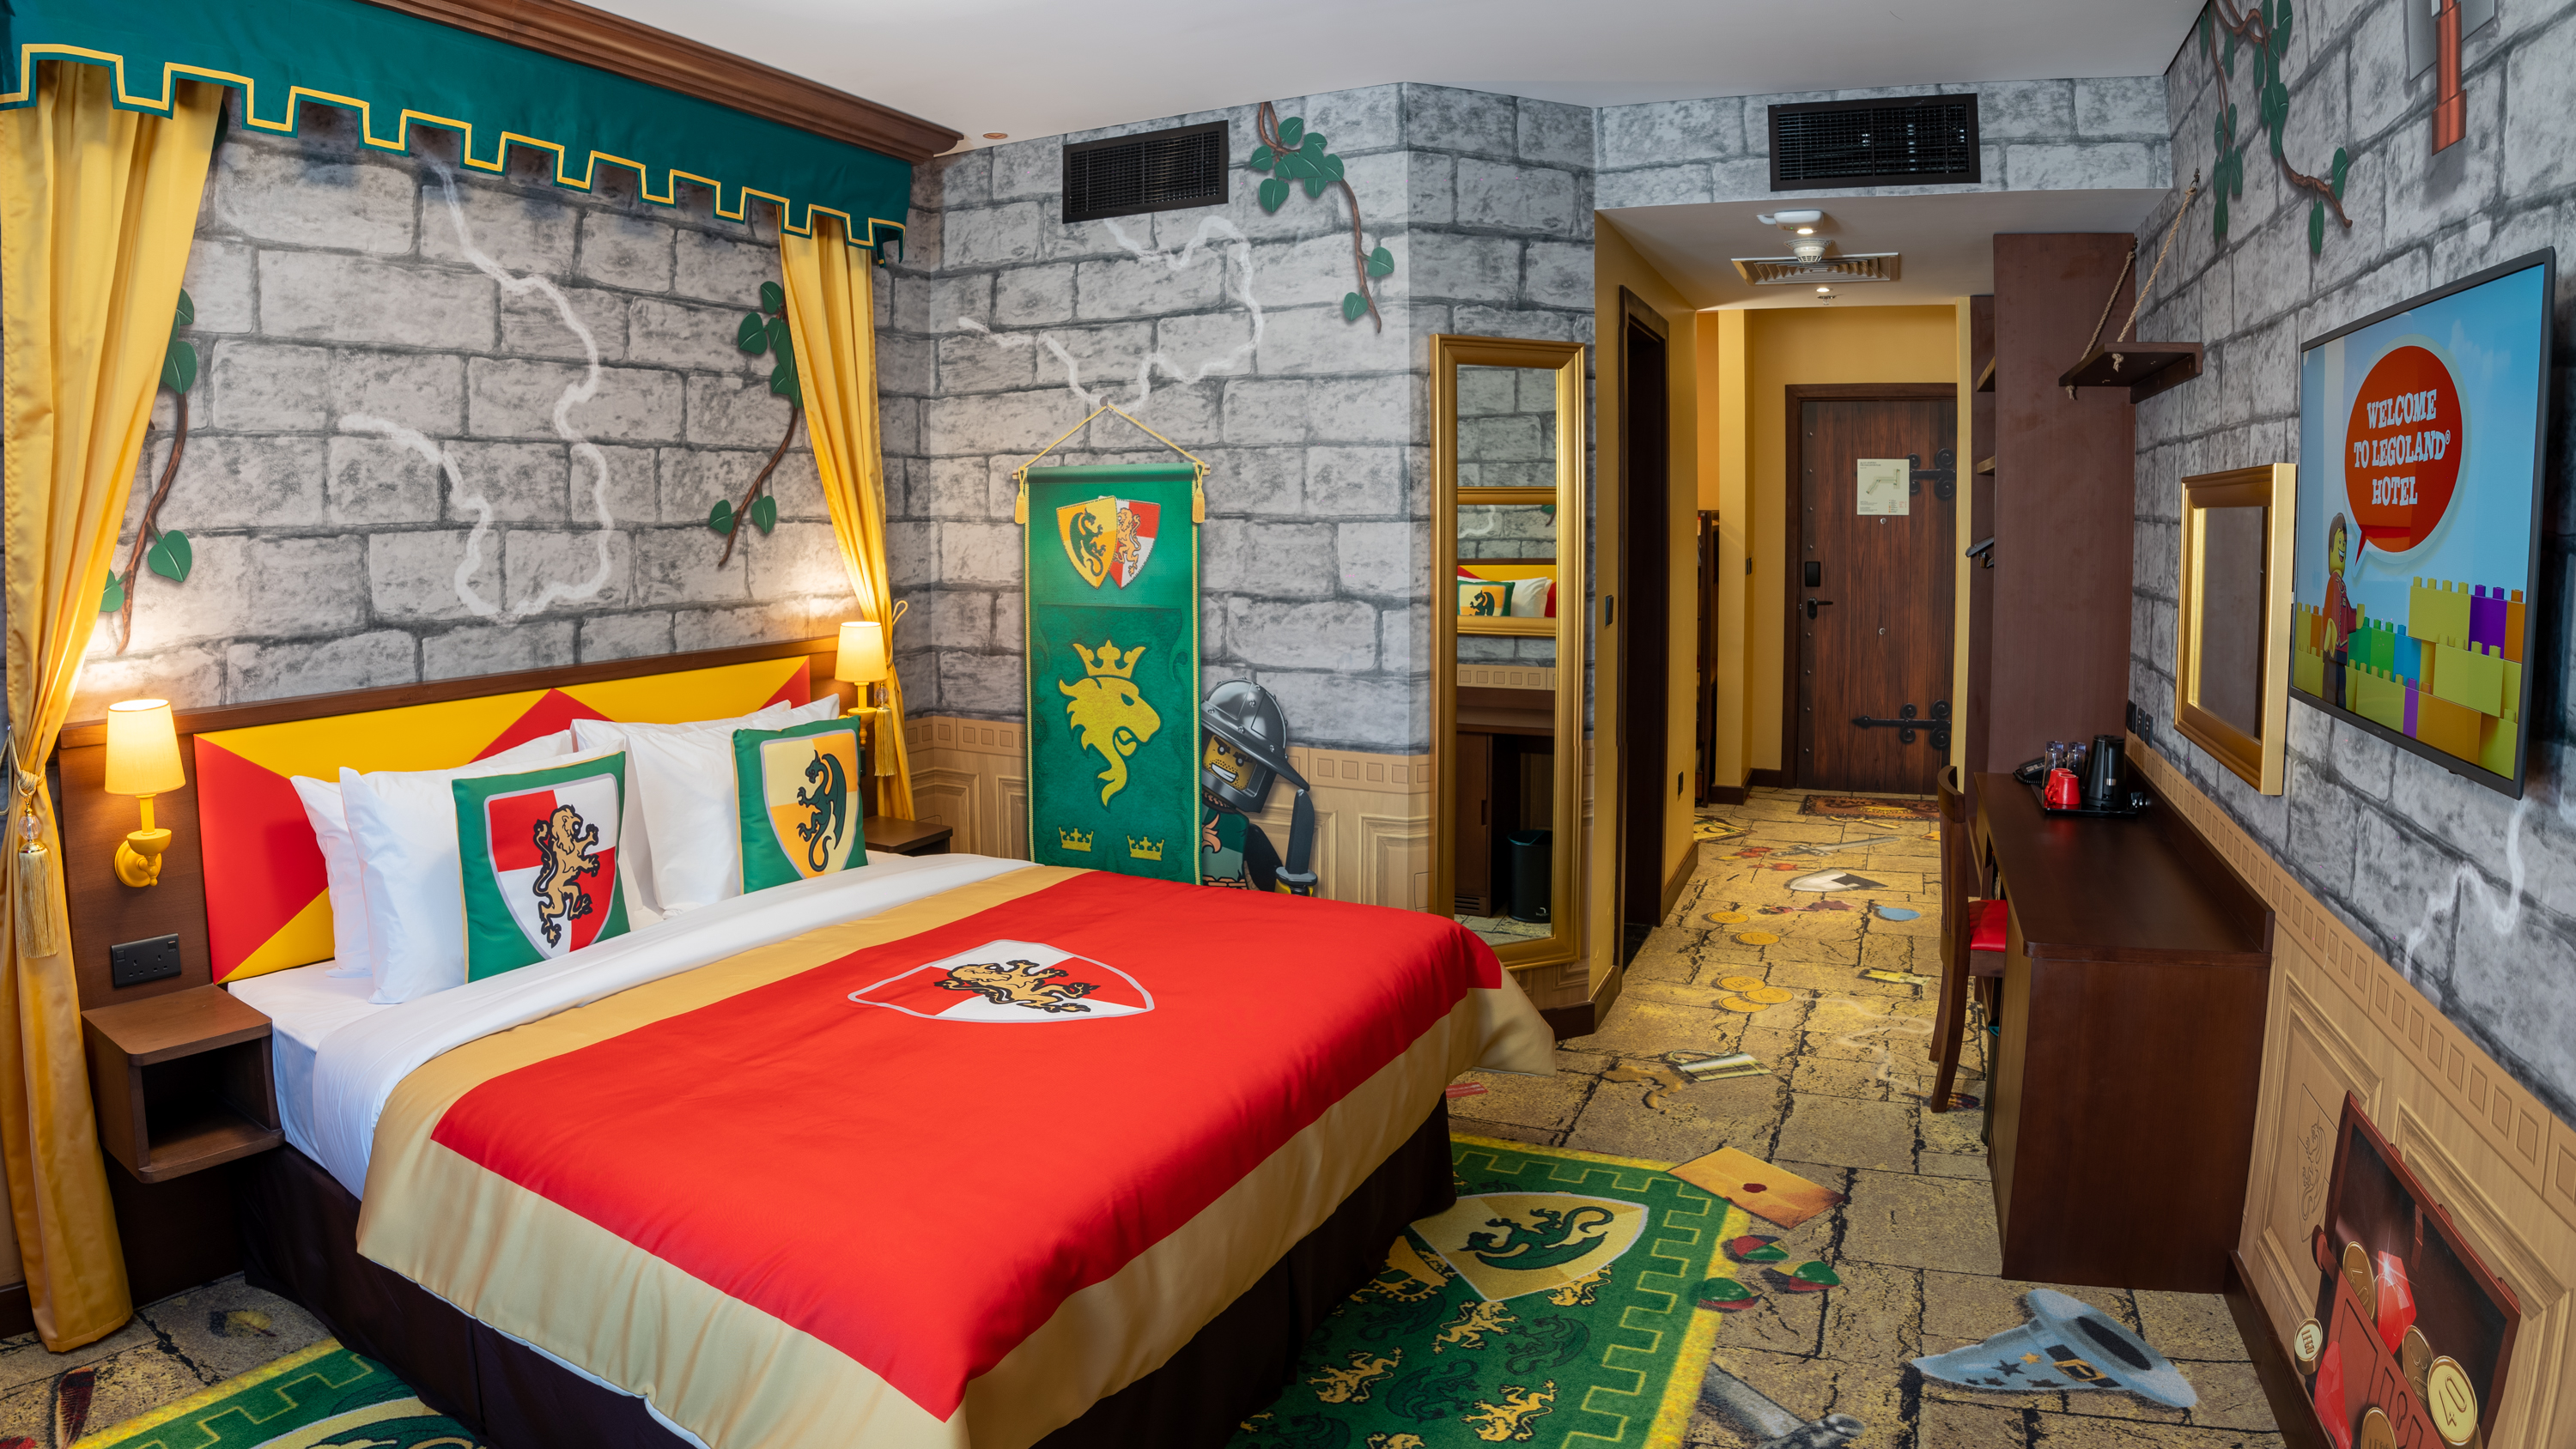 Legoland Hotel Room Interior Kingdom 4